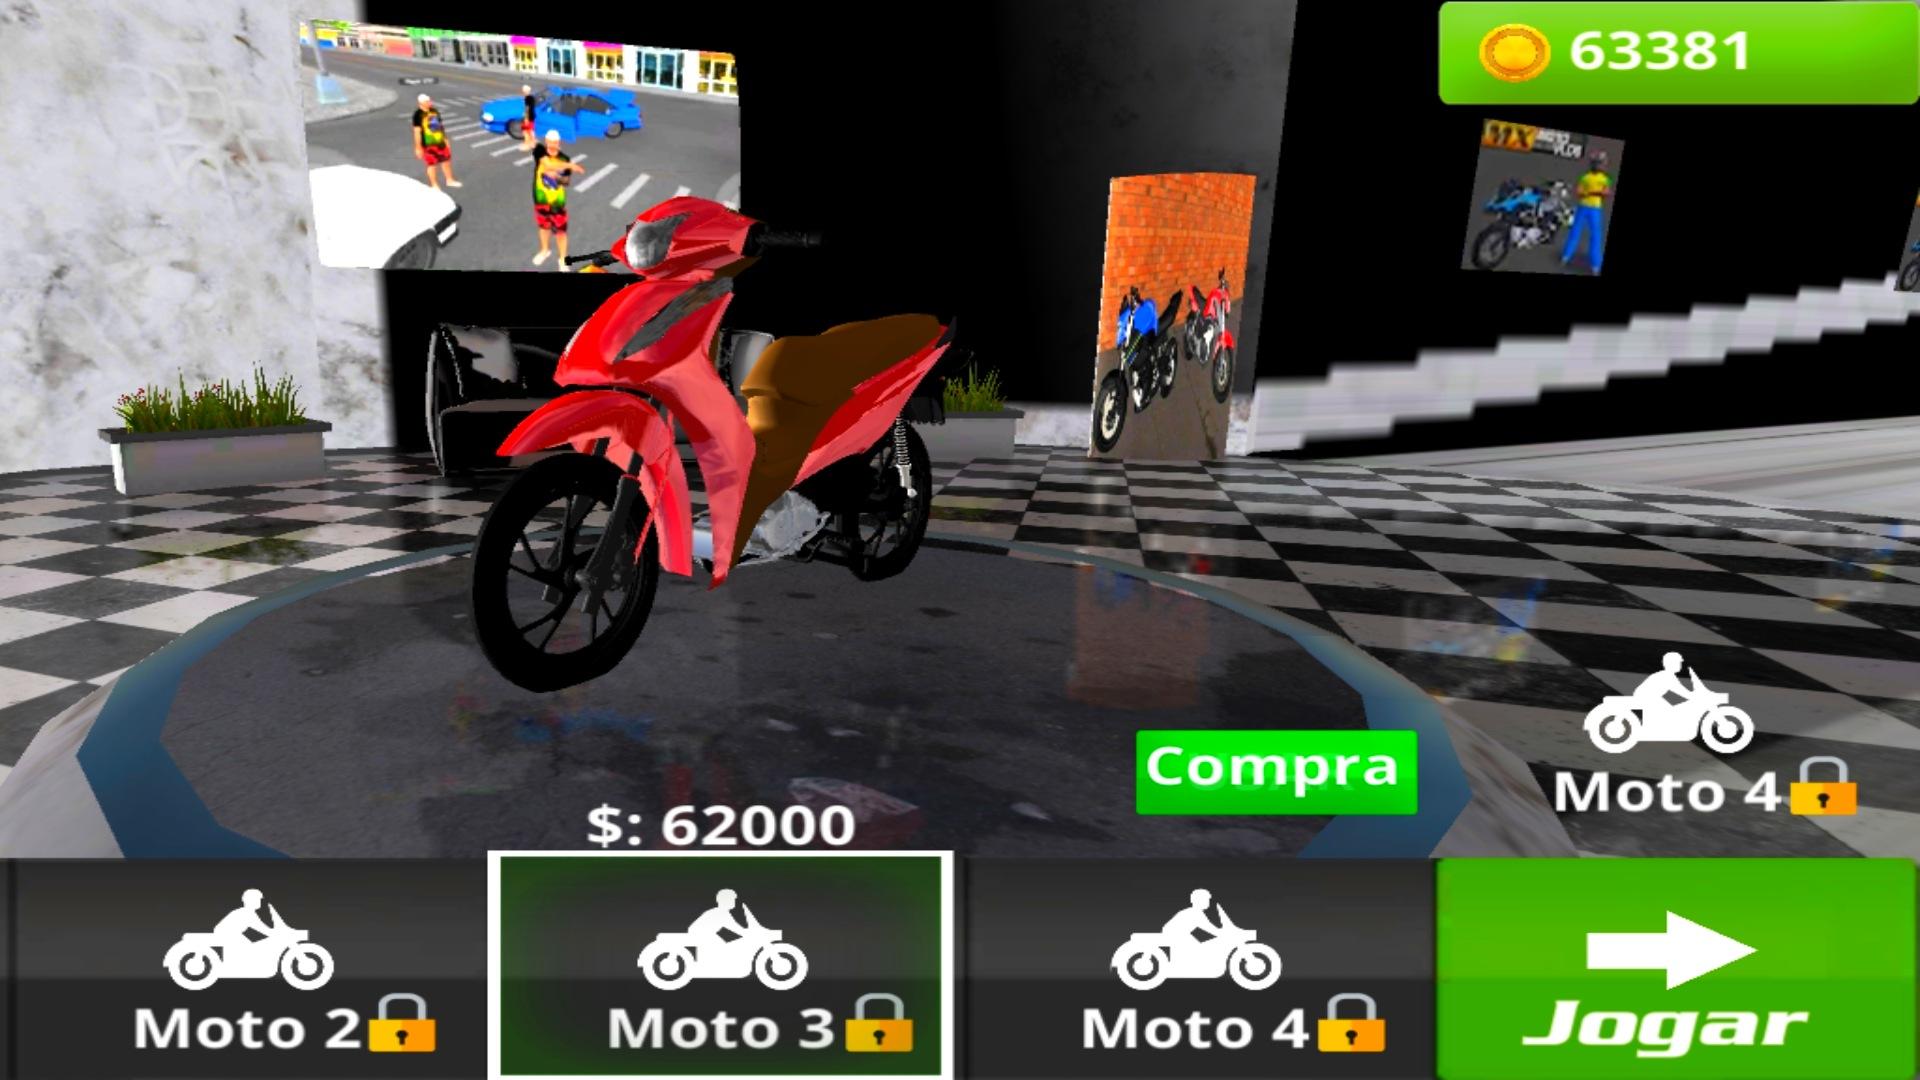 Motos Elite Brasil versão móvel andróide iOS apk baixar